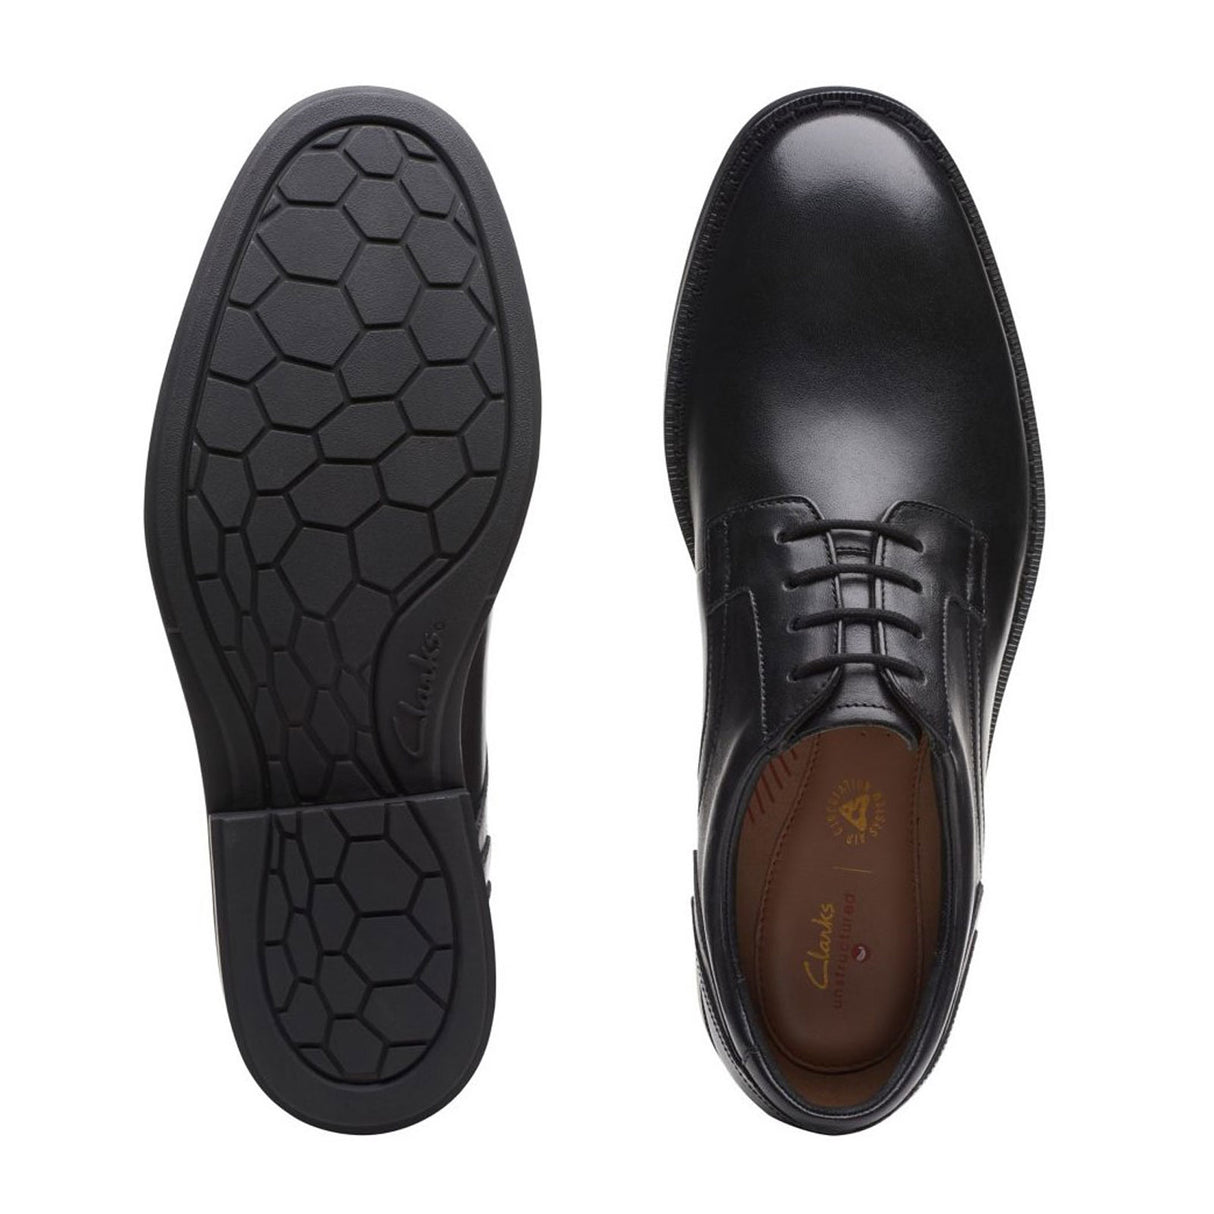 Clarks Un Hugh Lace Oxford (Men) - Black Leather Dress-Casual - Oxfords - The Heel Shoe Fitters